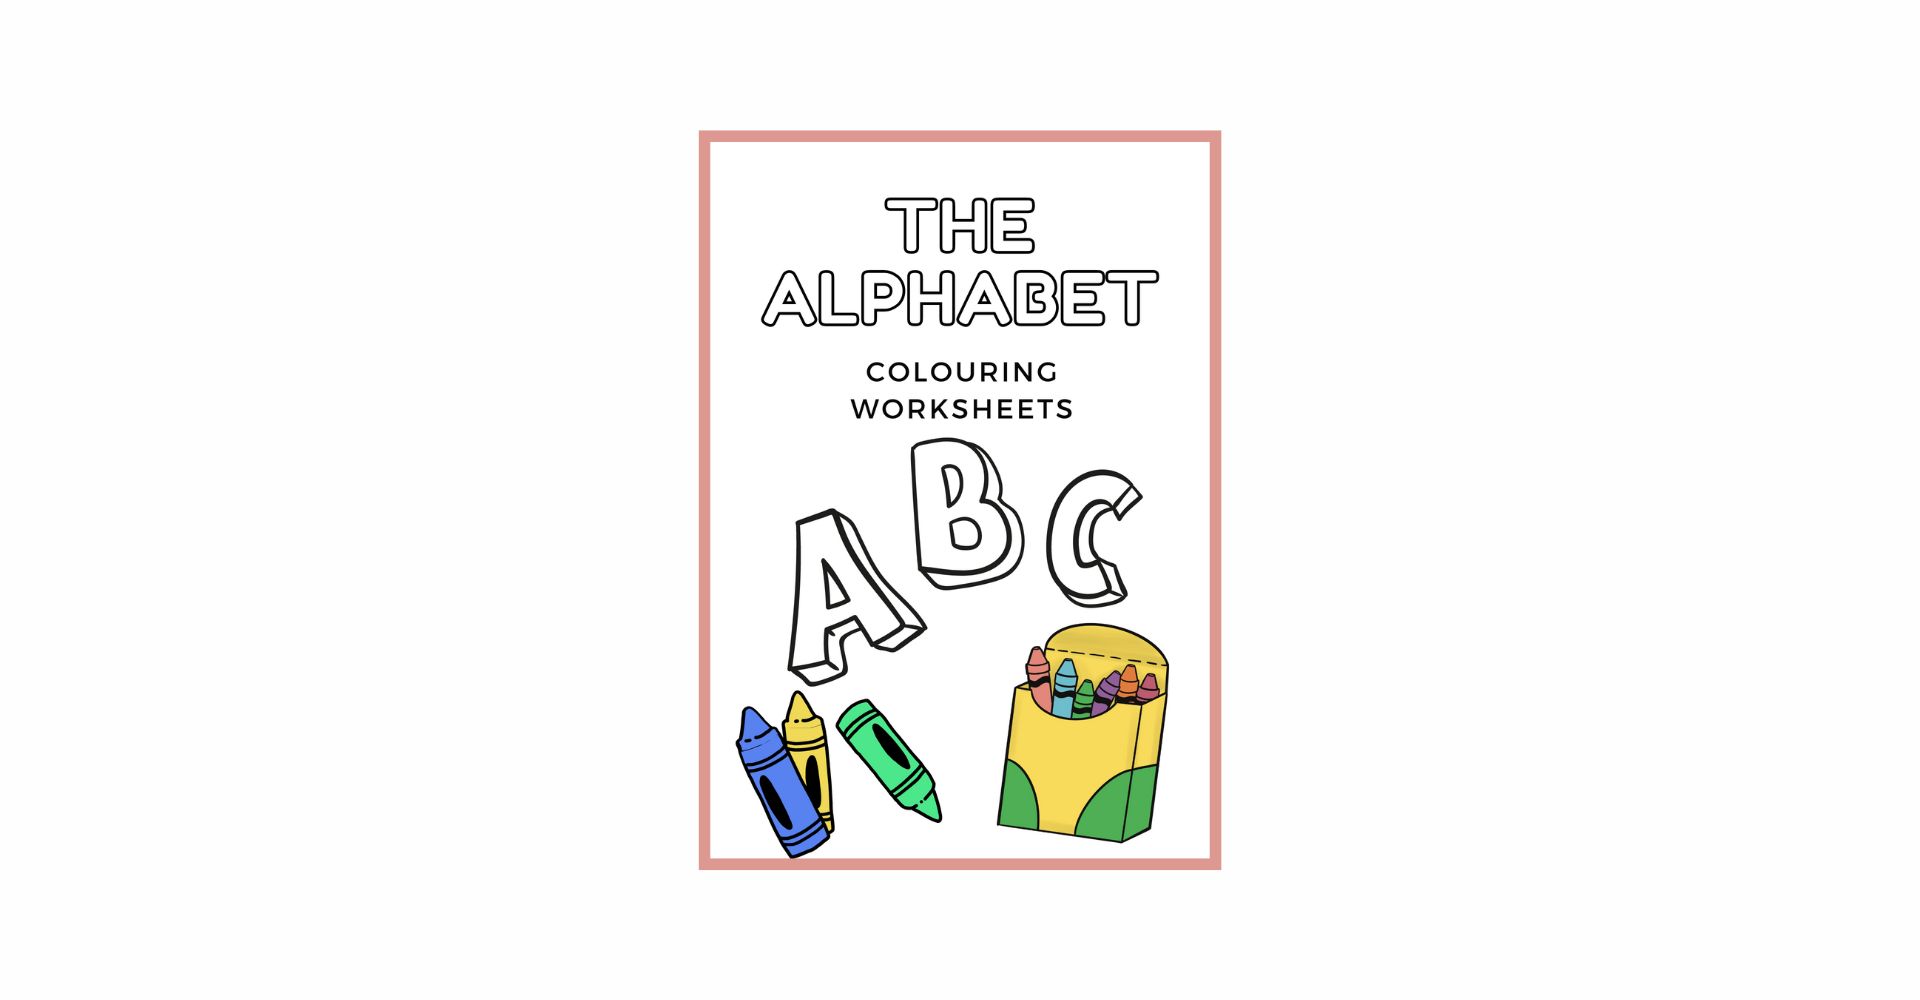 Alphabets Colouring Worksheets Download